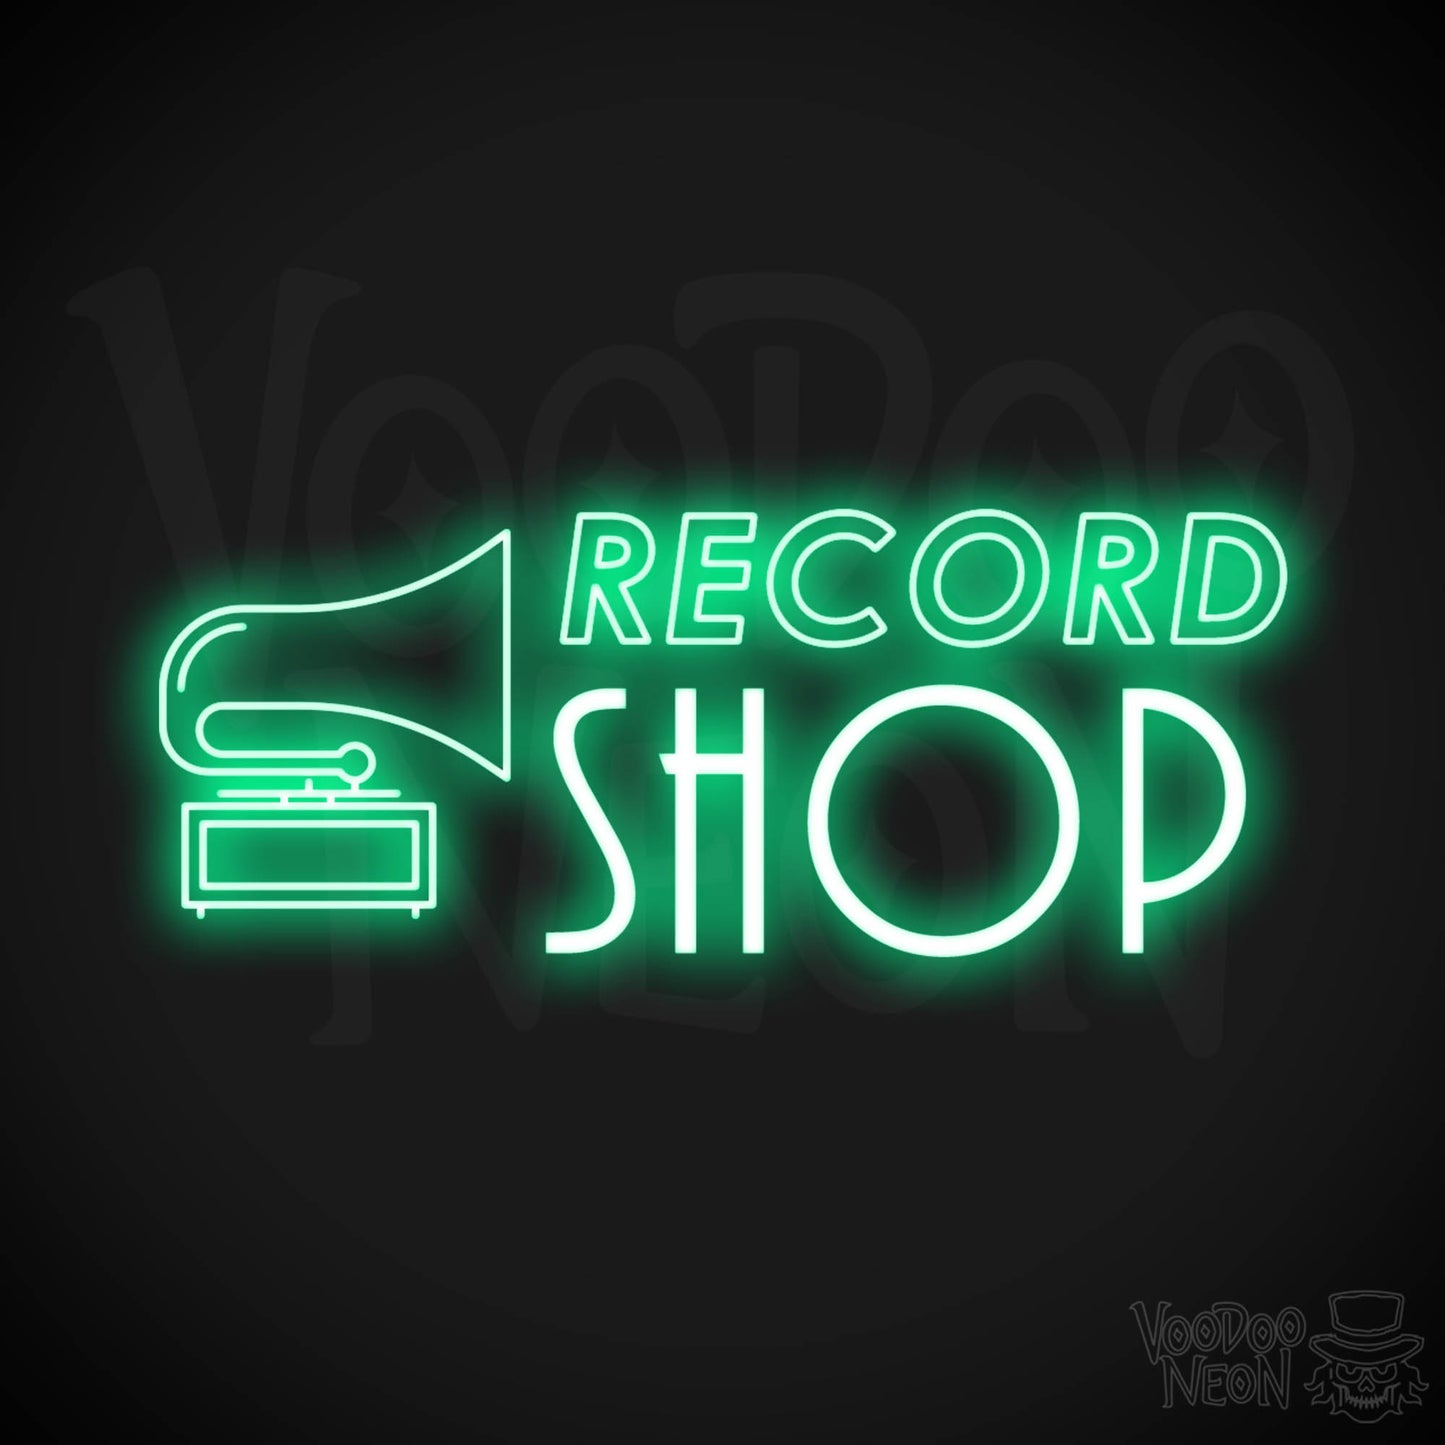 Record Shop Neon Sign - Neon Record Shop Sign - Color Green